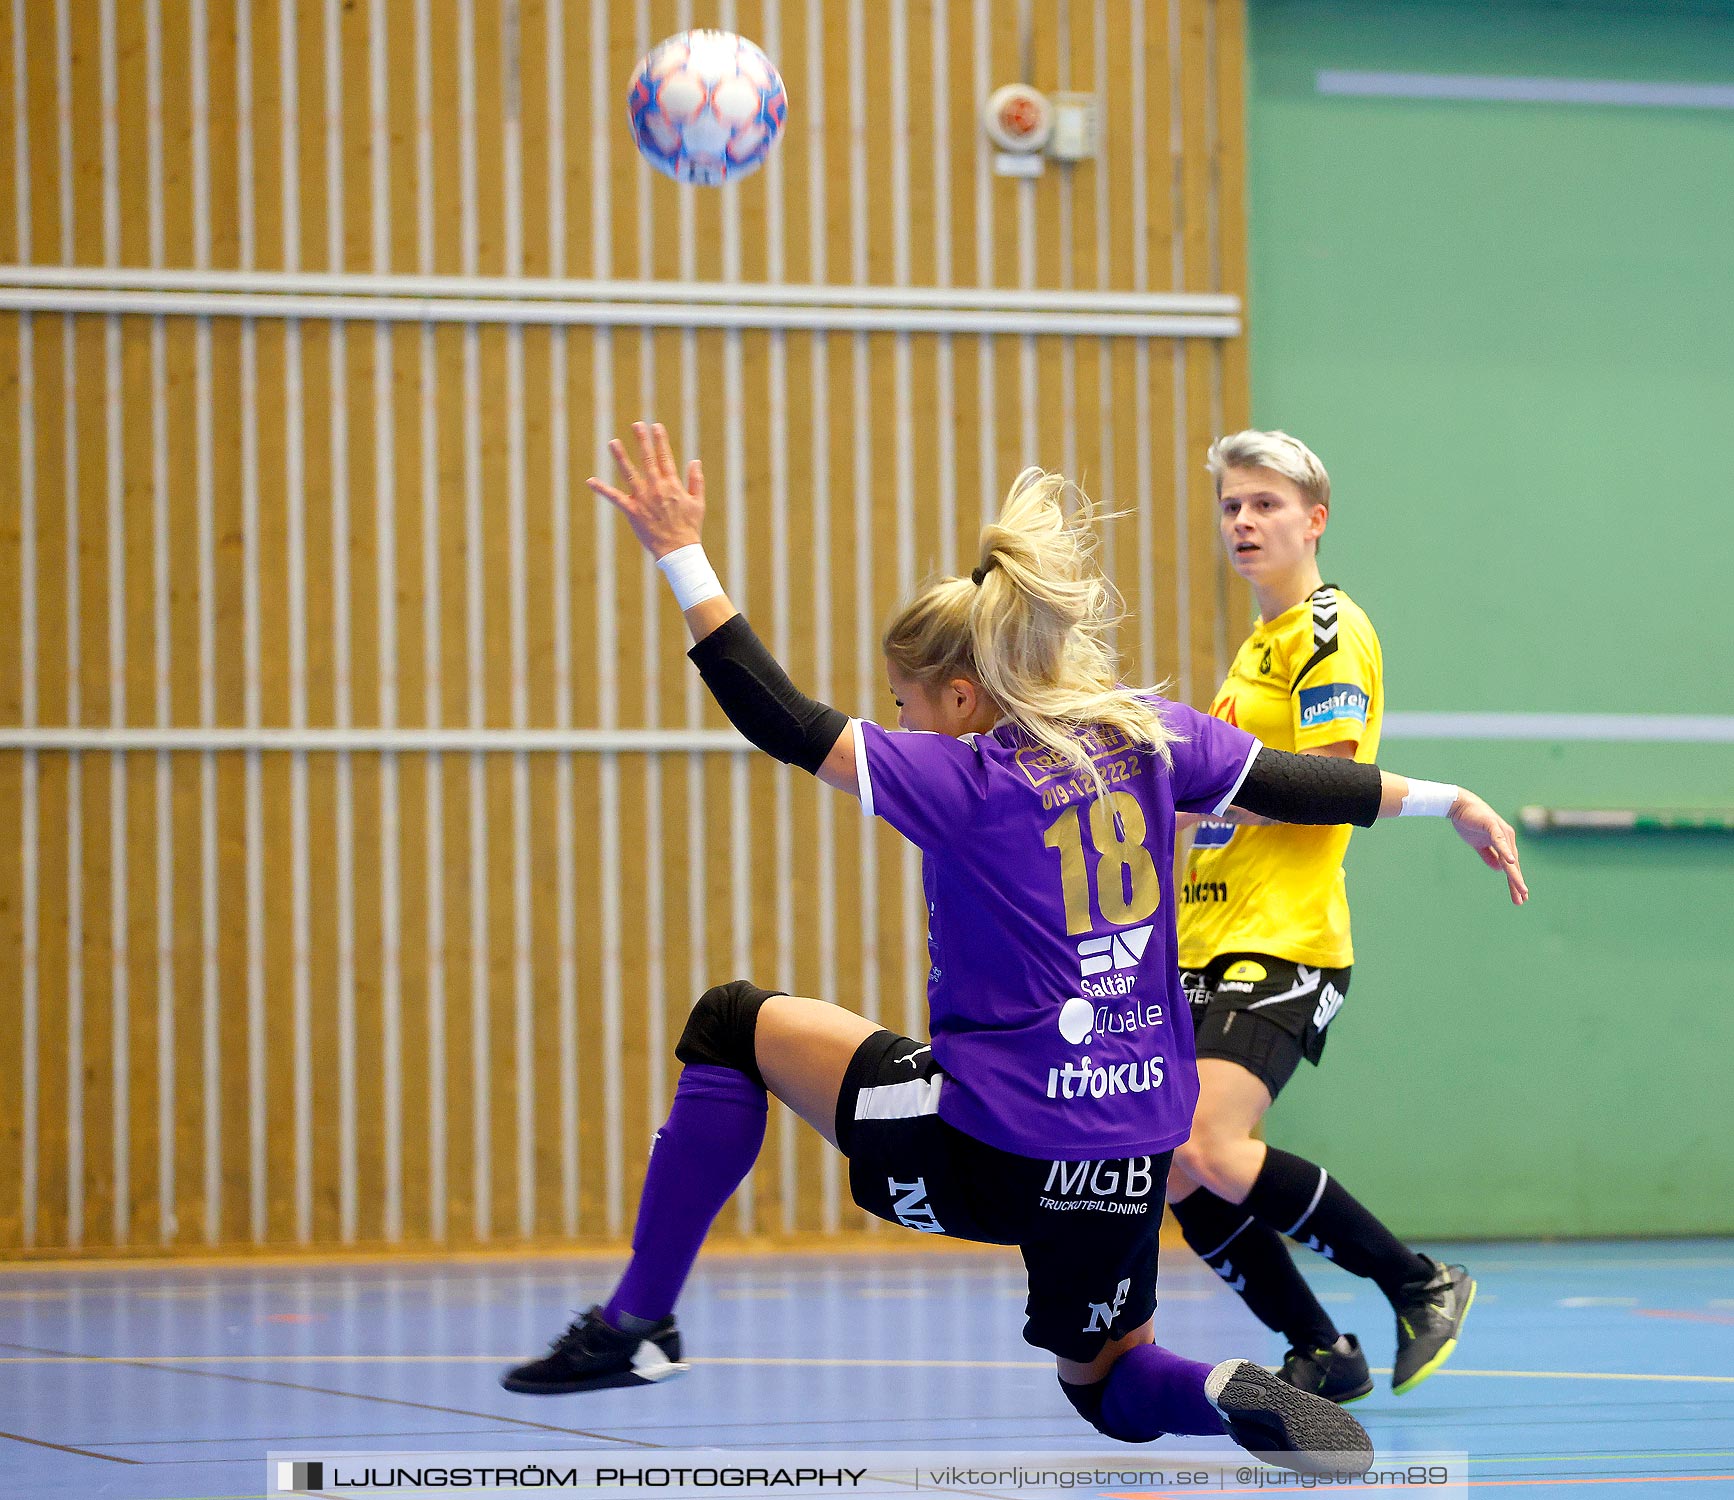 Skövde Futsalcup 2021 Damer Örebro Futsal Club-Skultorps IF 2,dam,Arena Skövde,Skövde,Sverige,Futsal,,2021,270518